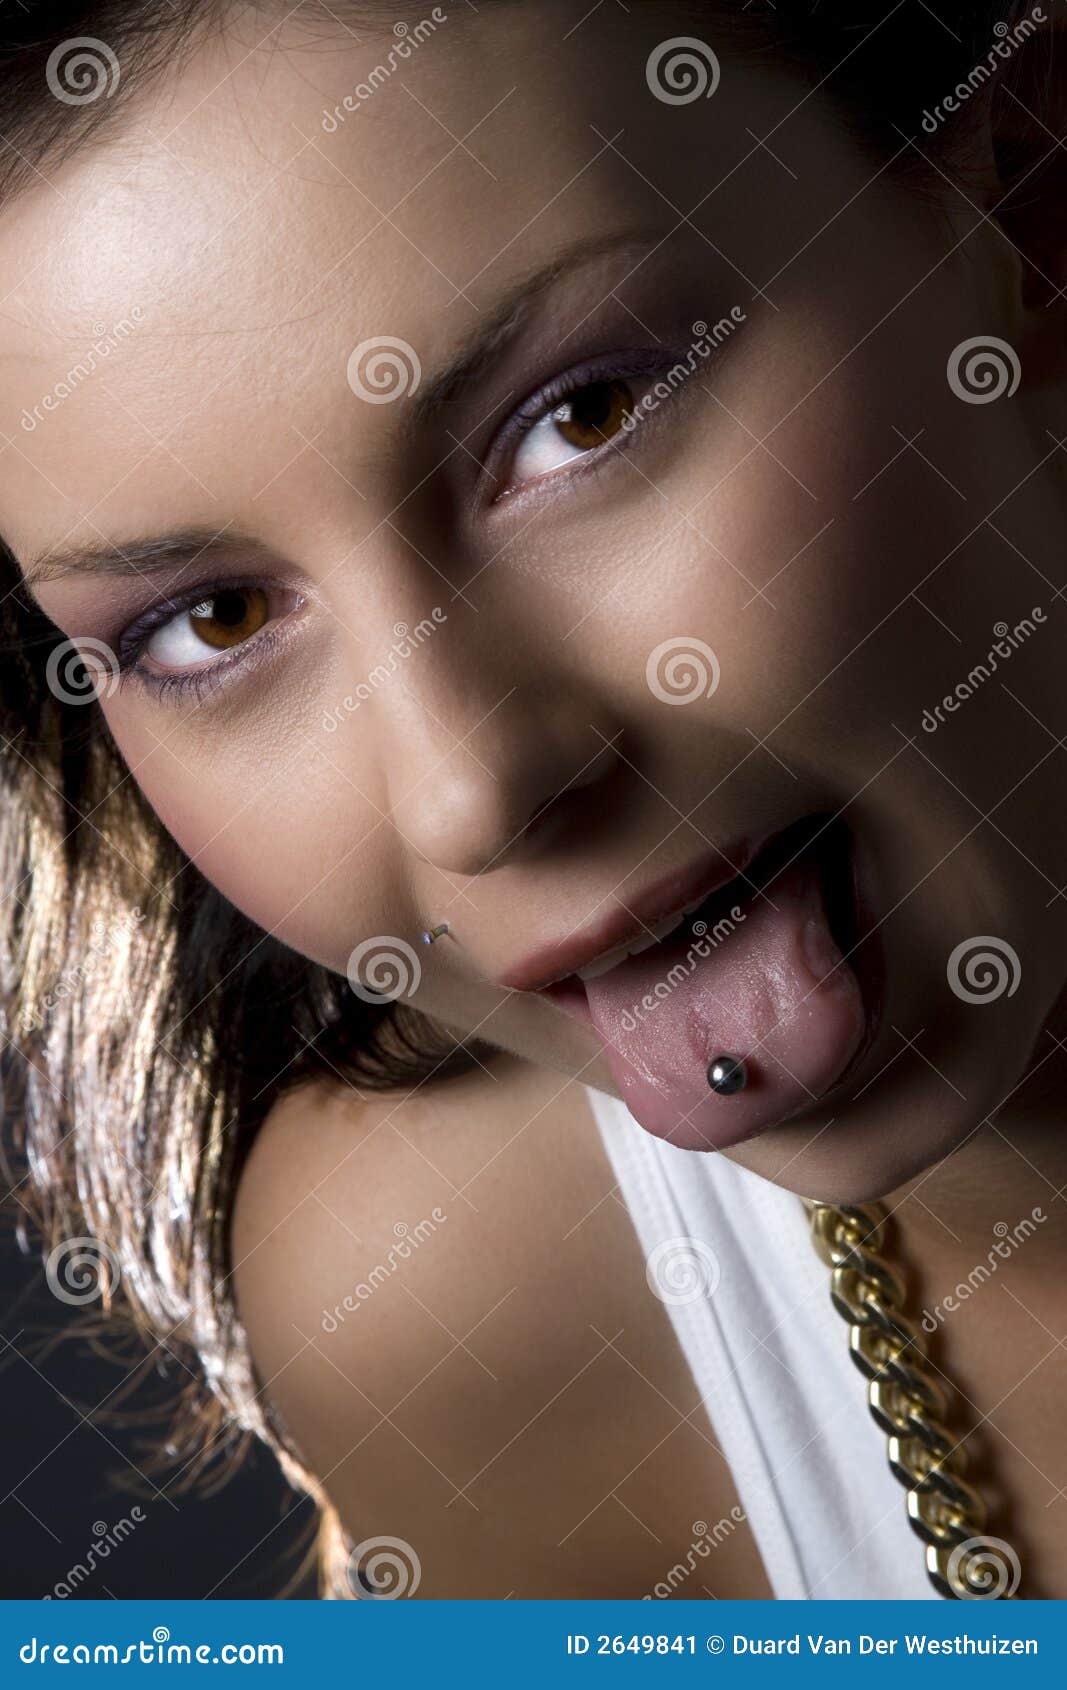 Tongue Ring Girl Stock Image Im